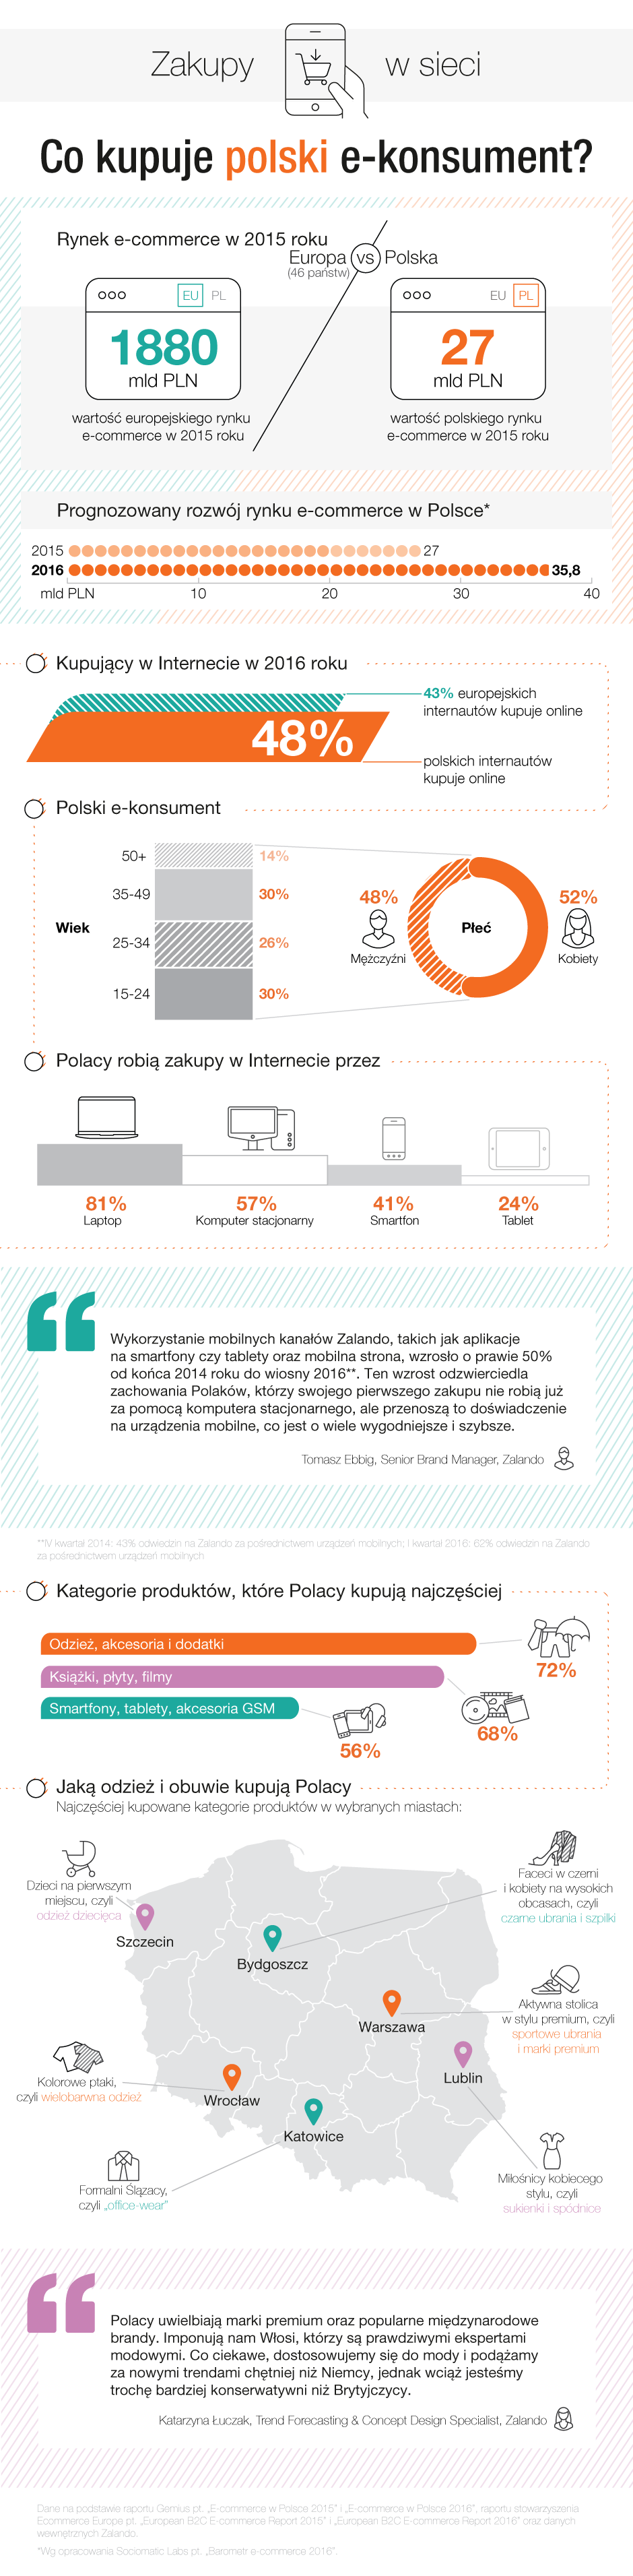 Infografika_Co kupuje polski e-konsument